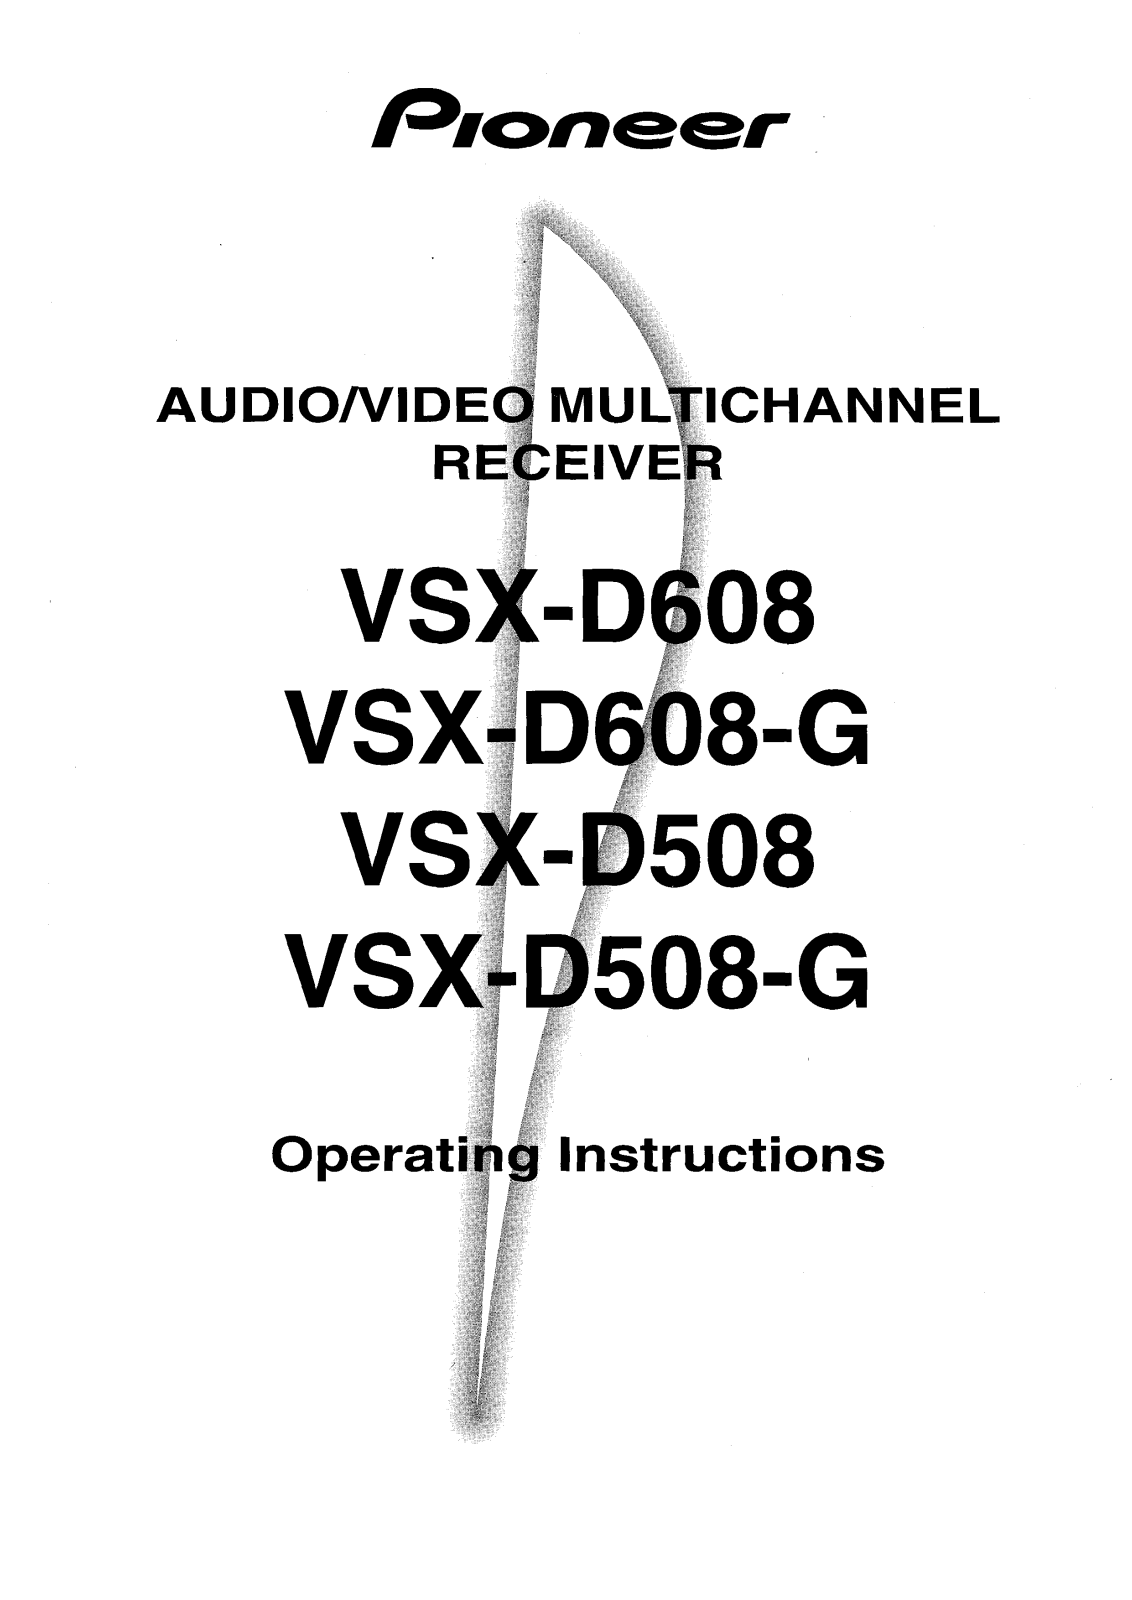 Pioneer VSX-D508, VSX-D508-G, VSX-D608, VSX-D608-G Operating Instruction